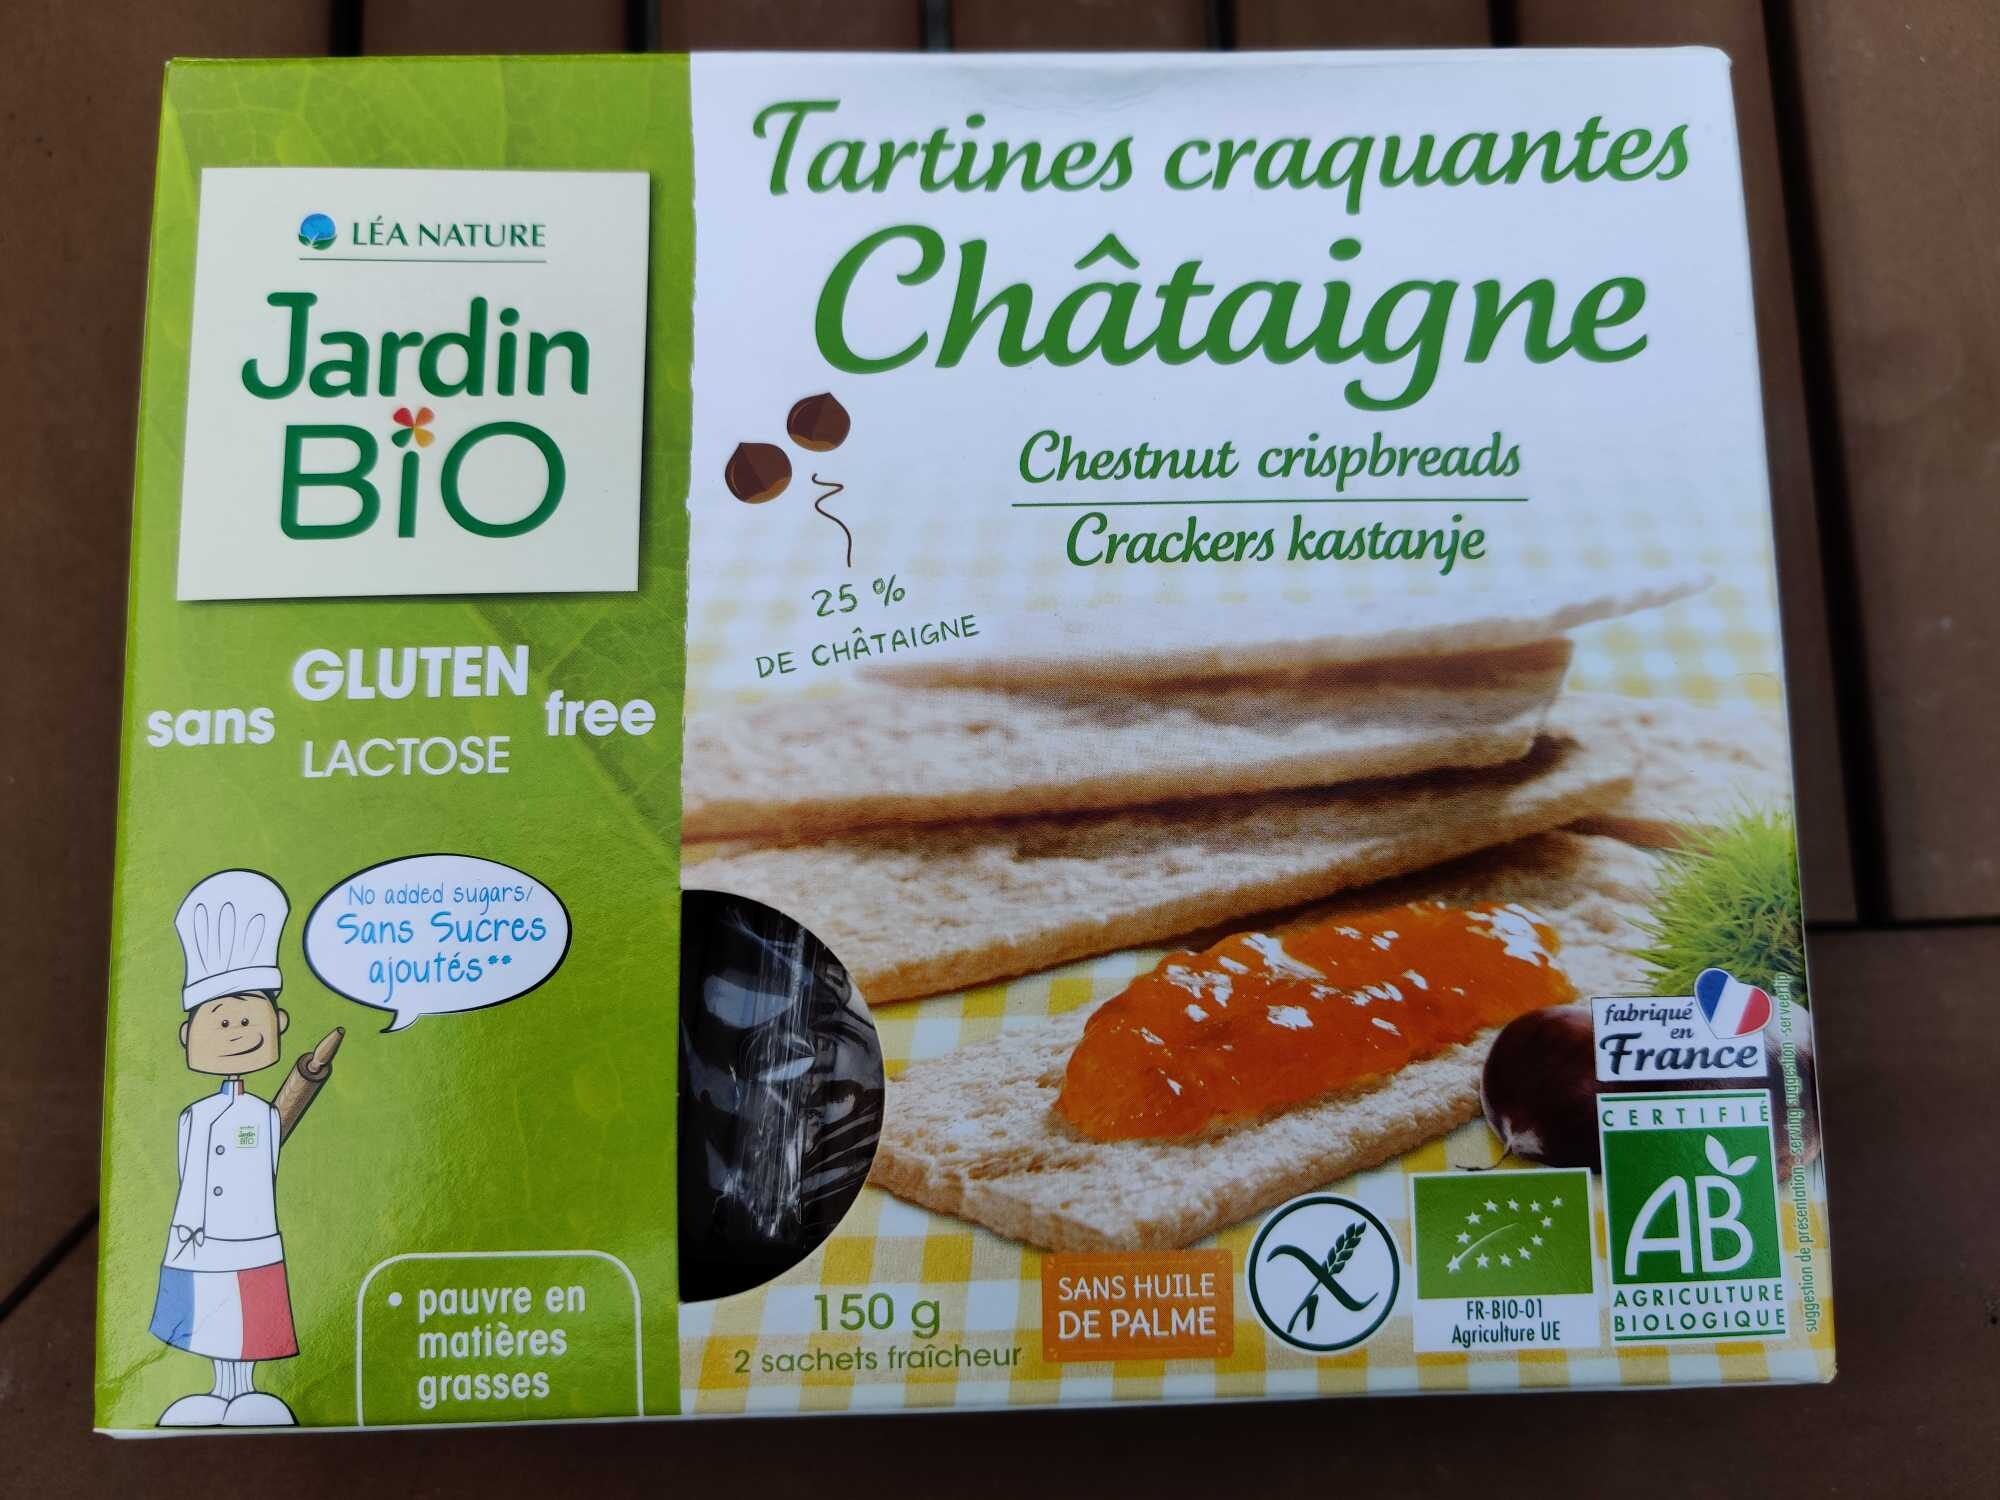 Tartines craquant es châtaigne - Produkt - fr